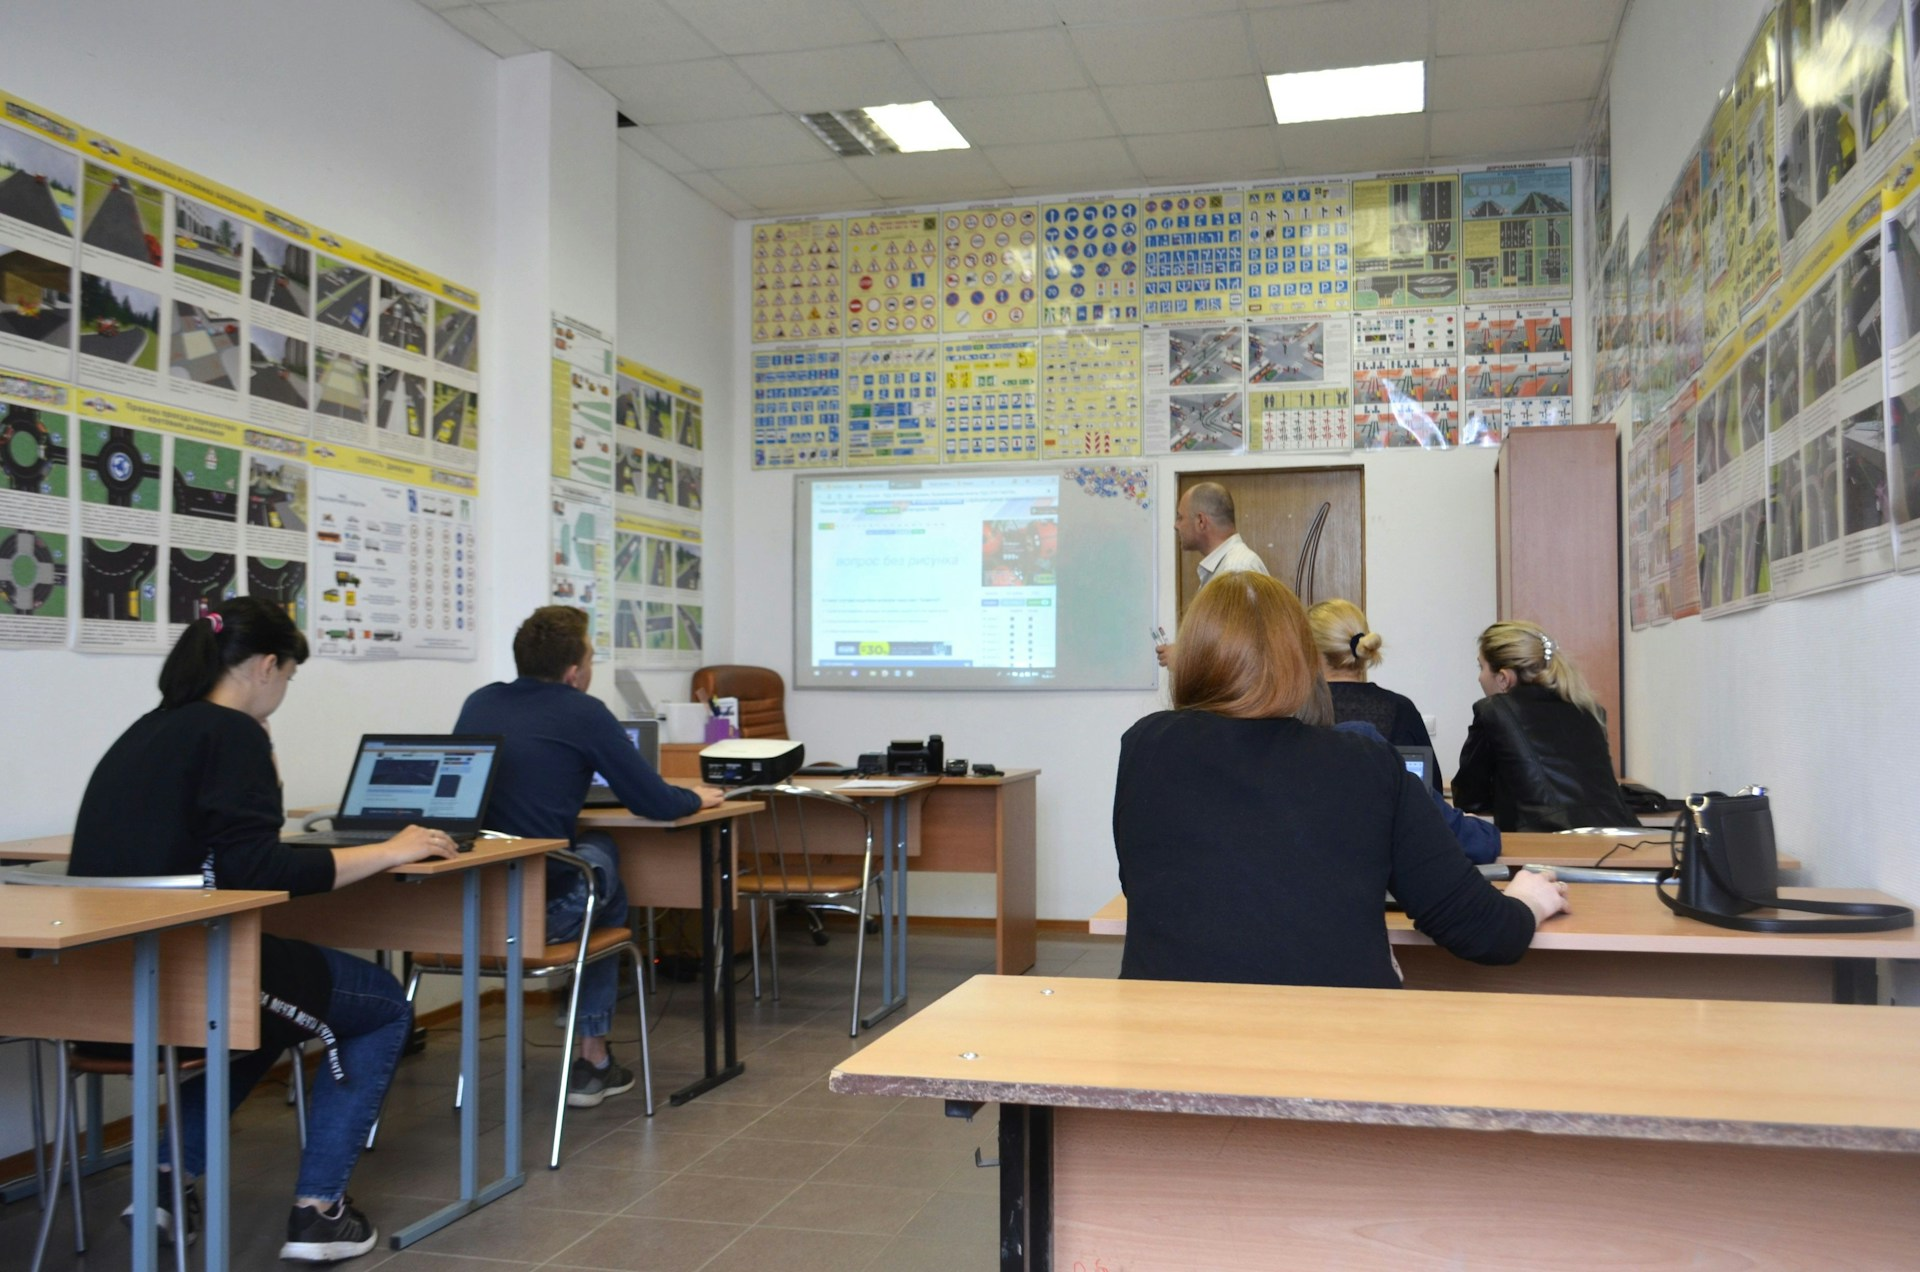 Students attending a class